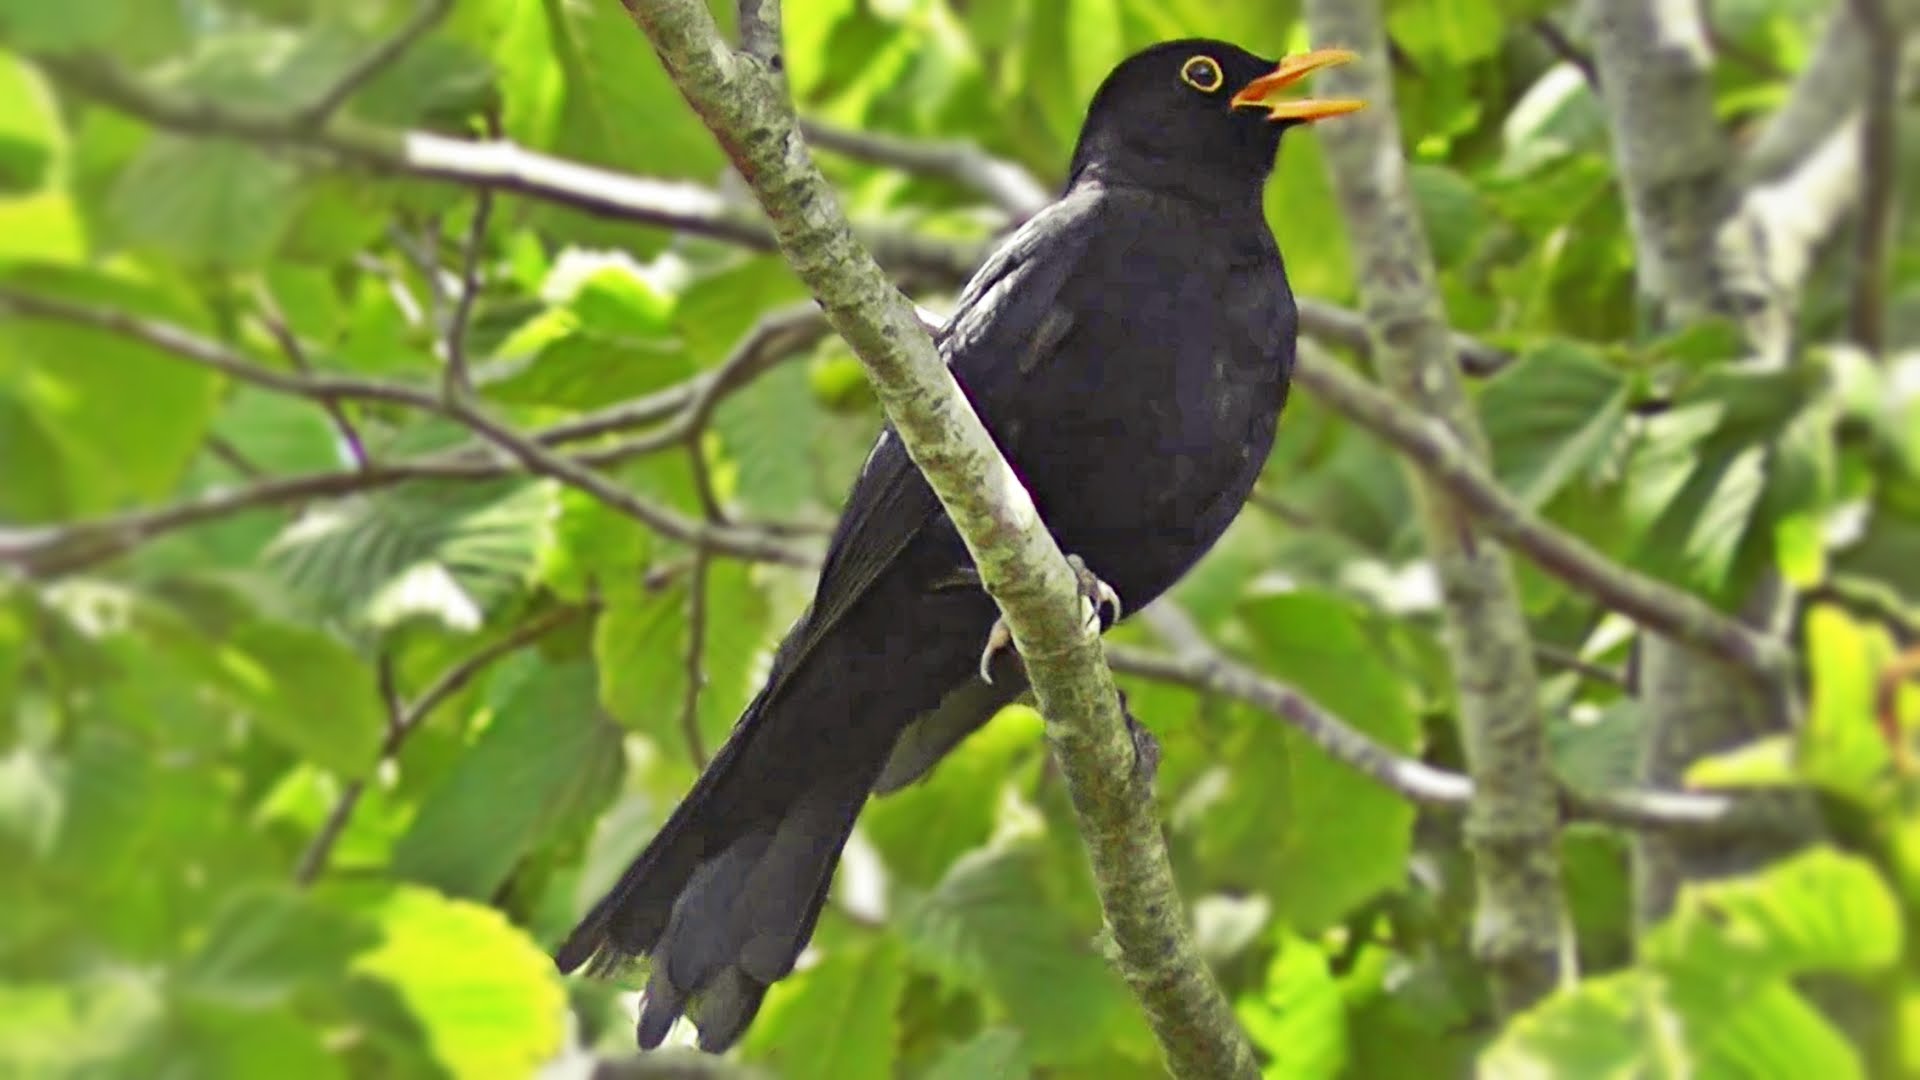 Blackbird Singing in The Garden - Birds Singing - YouTube